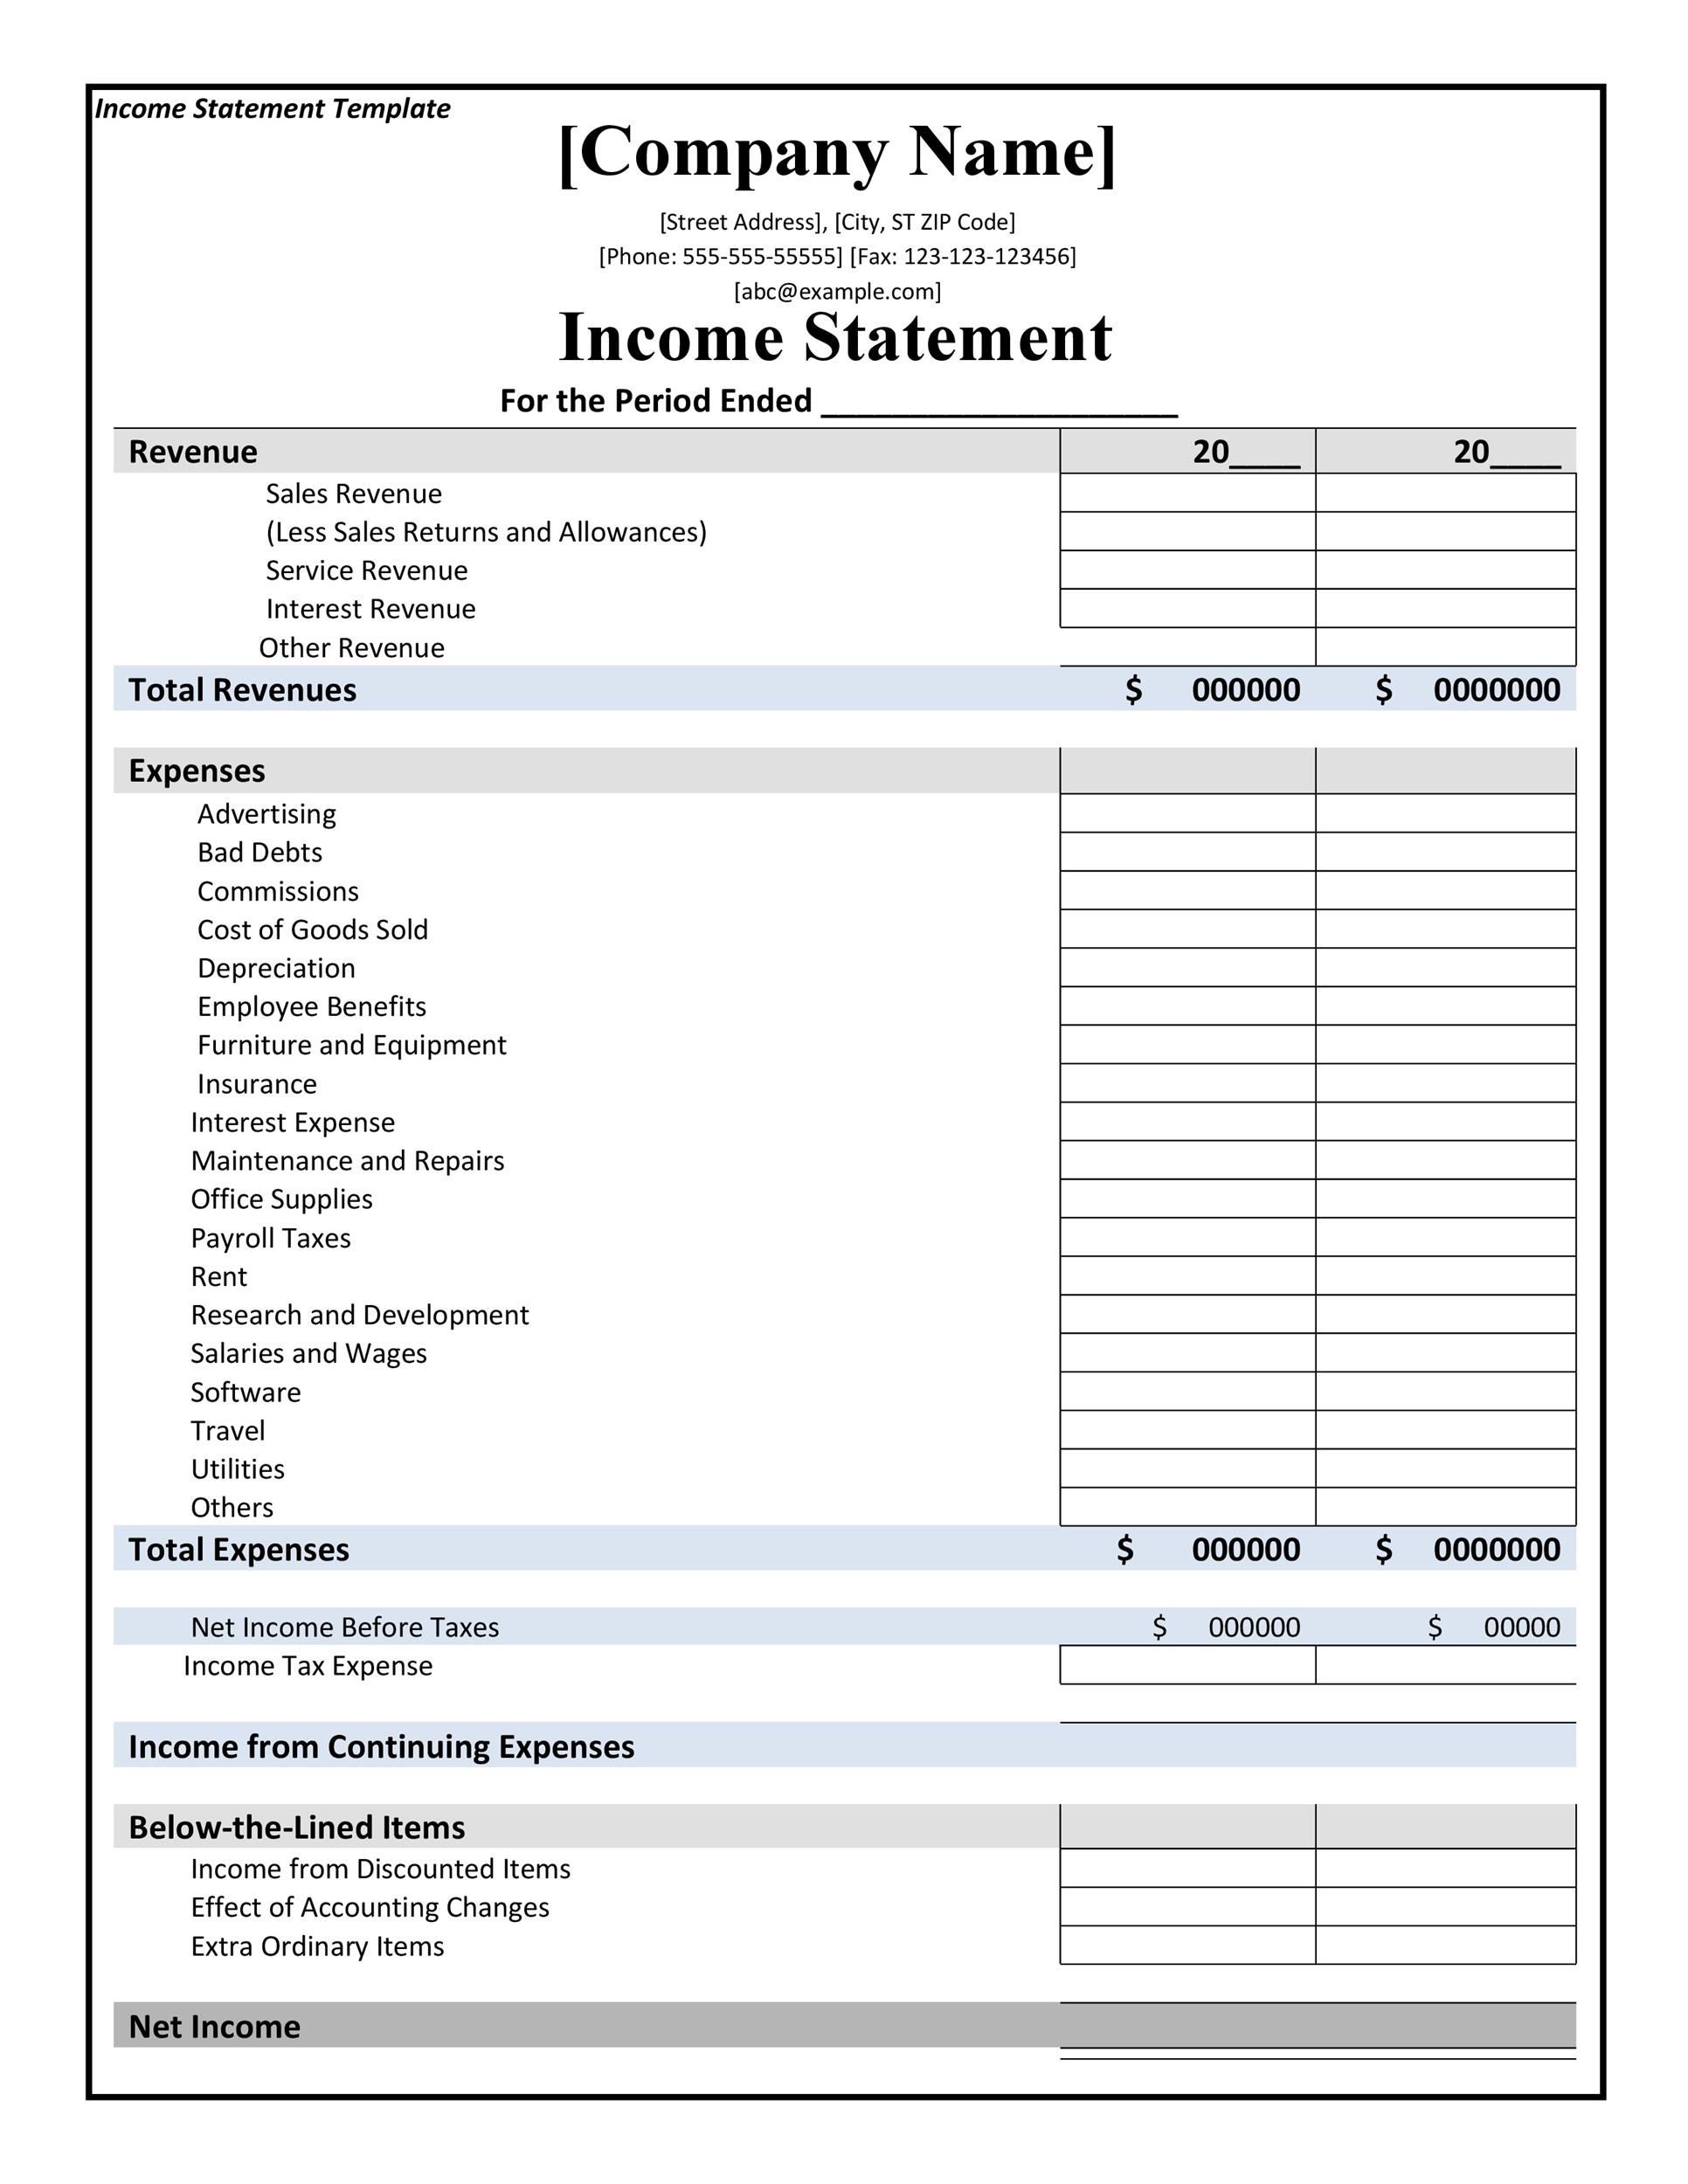 Free Income Statement Template 24